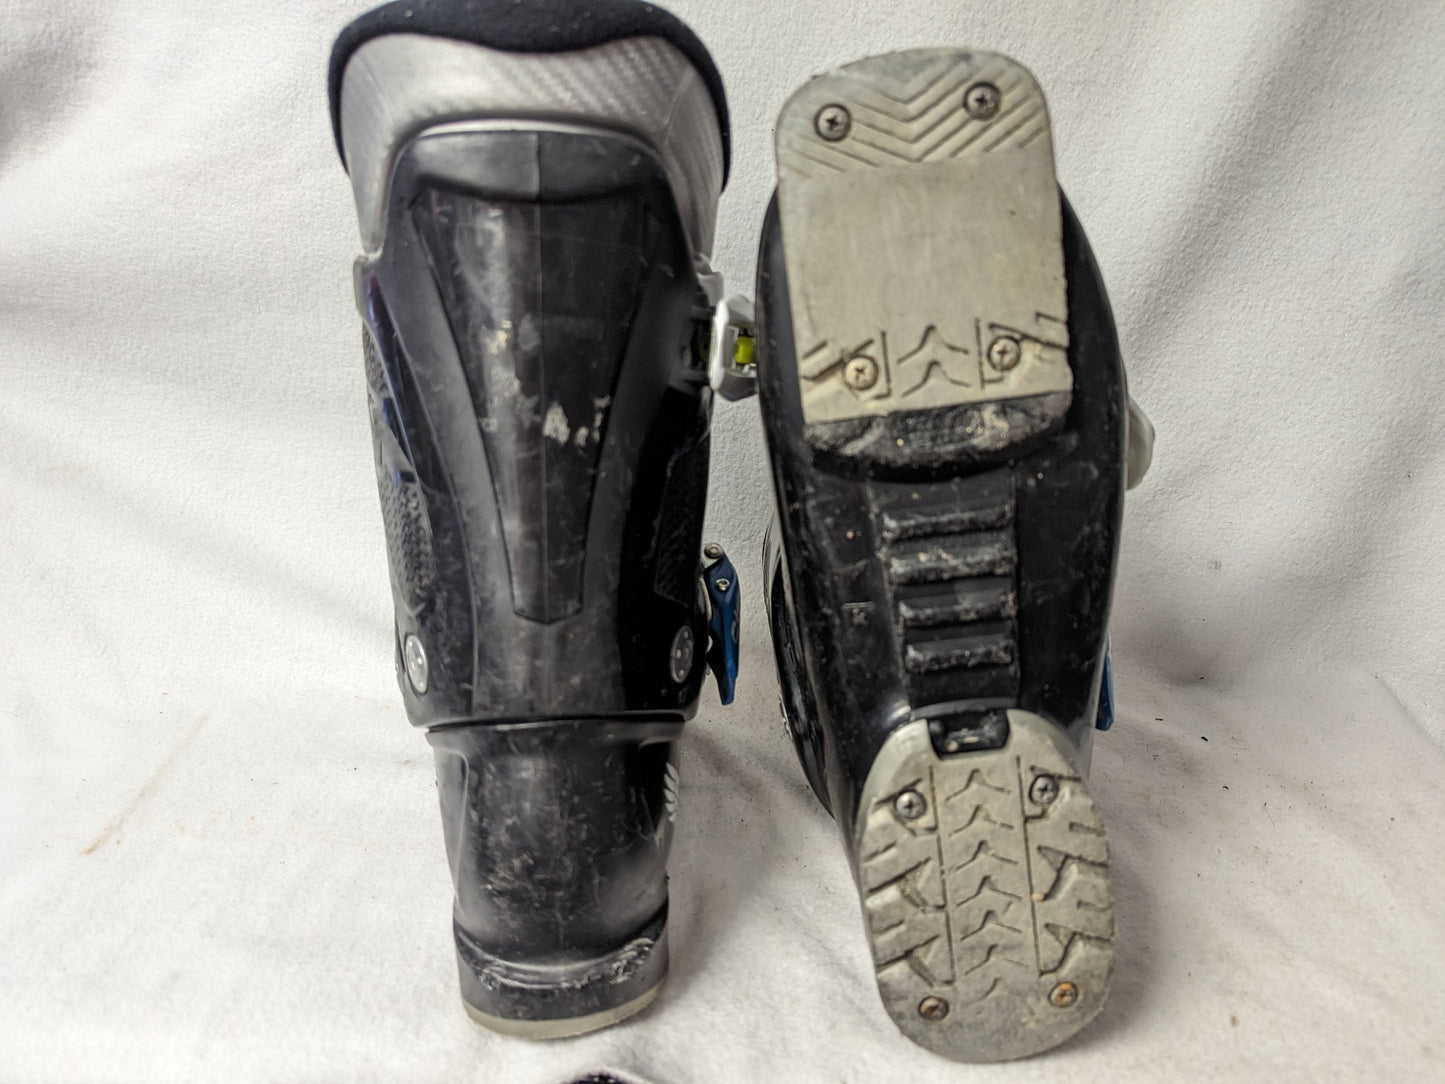 Nordica Firearrow Team 3 Ski Boots Size 25 Color Black Condition Used